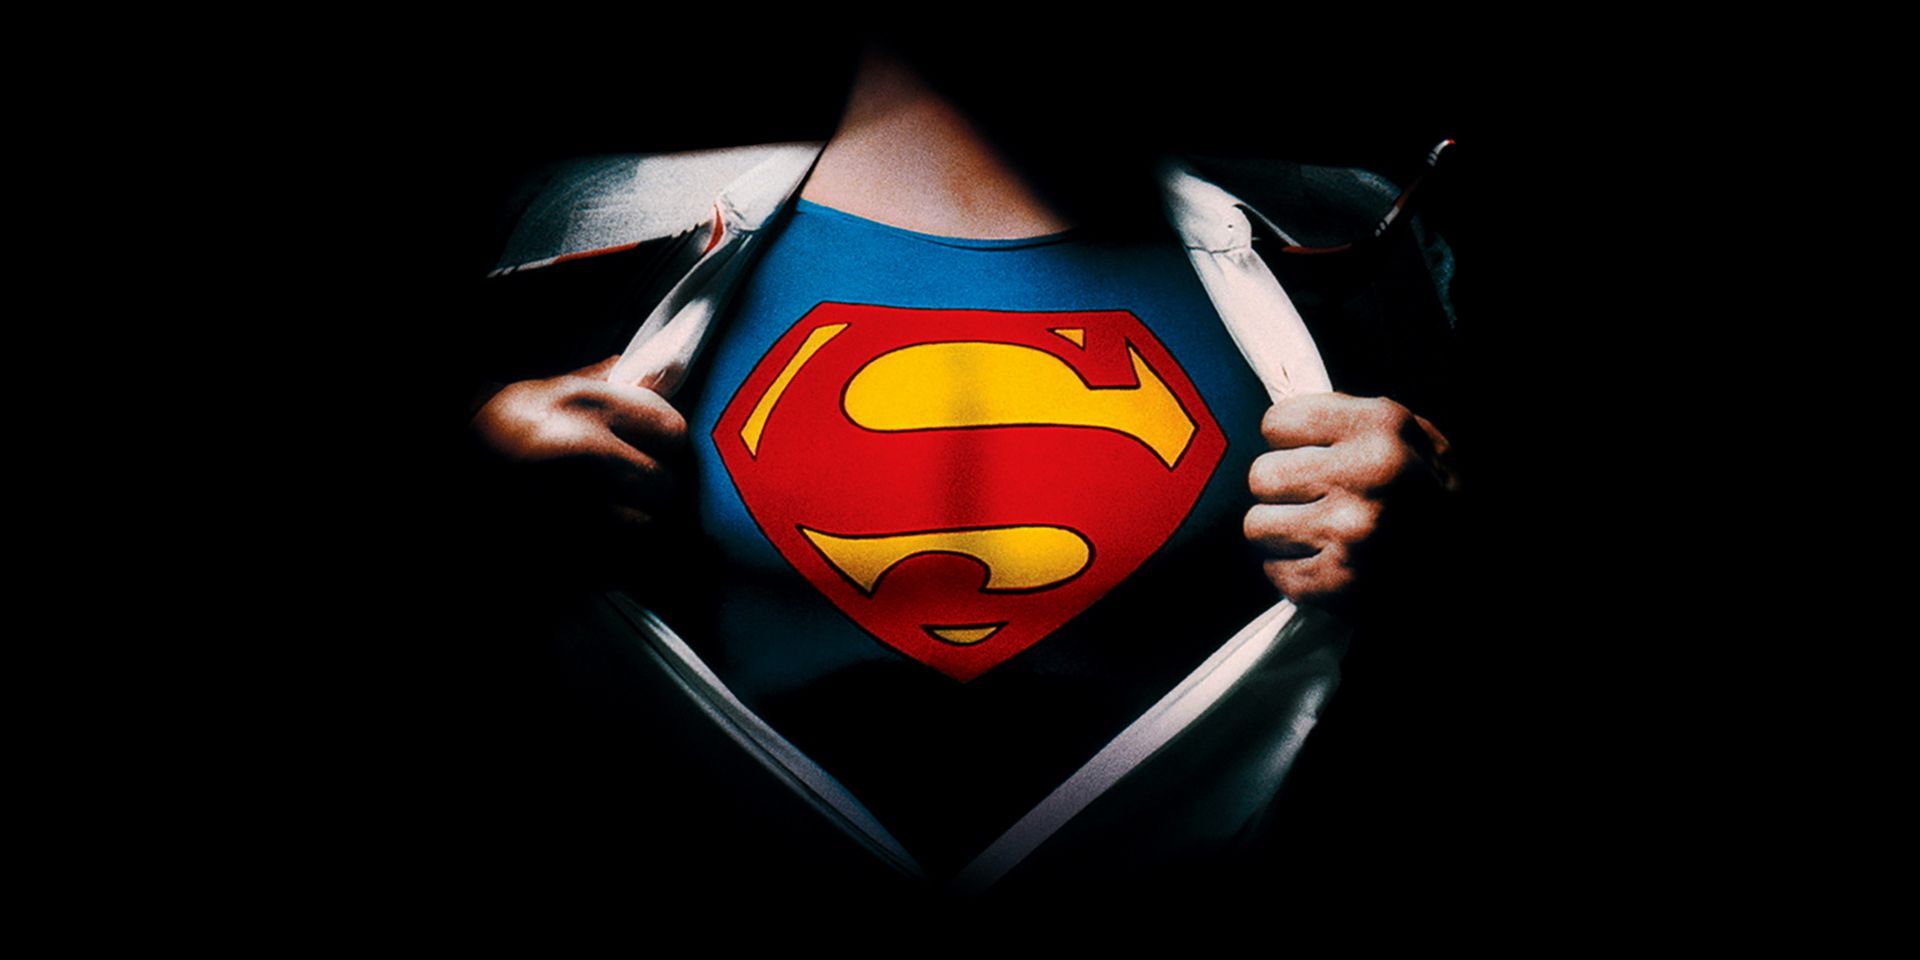 Superman-II-the-Richard-Donner-Cut-Poster